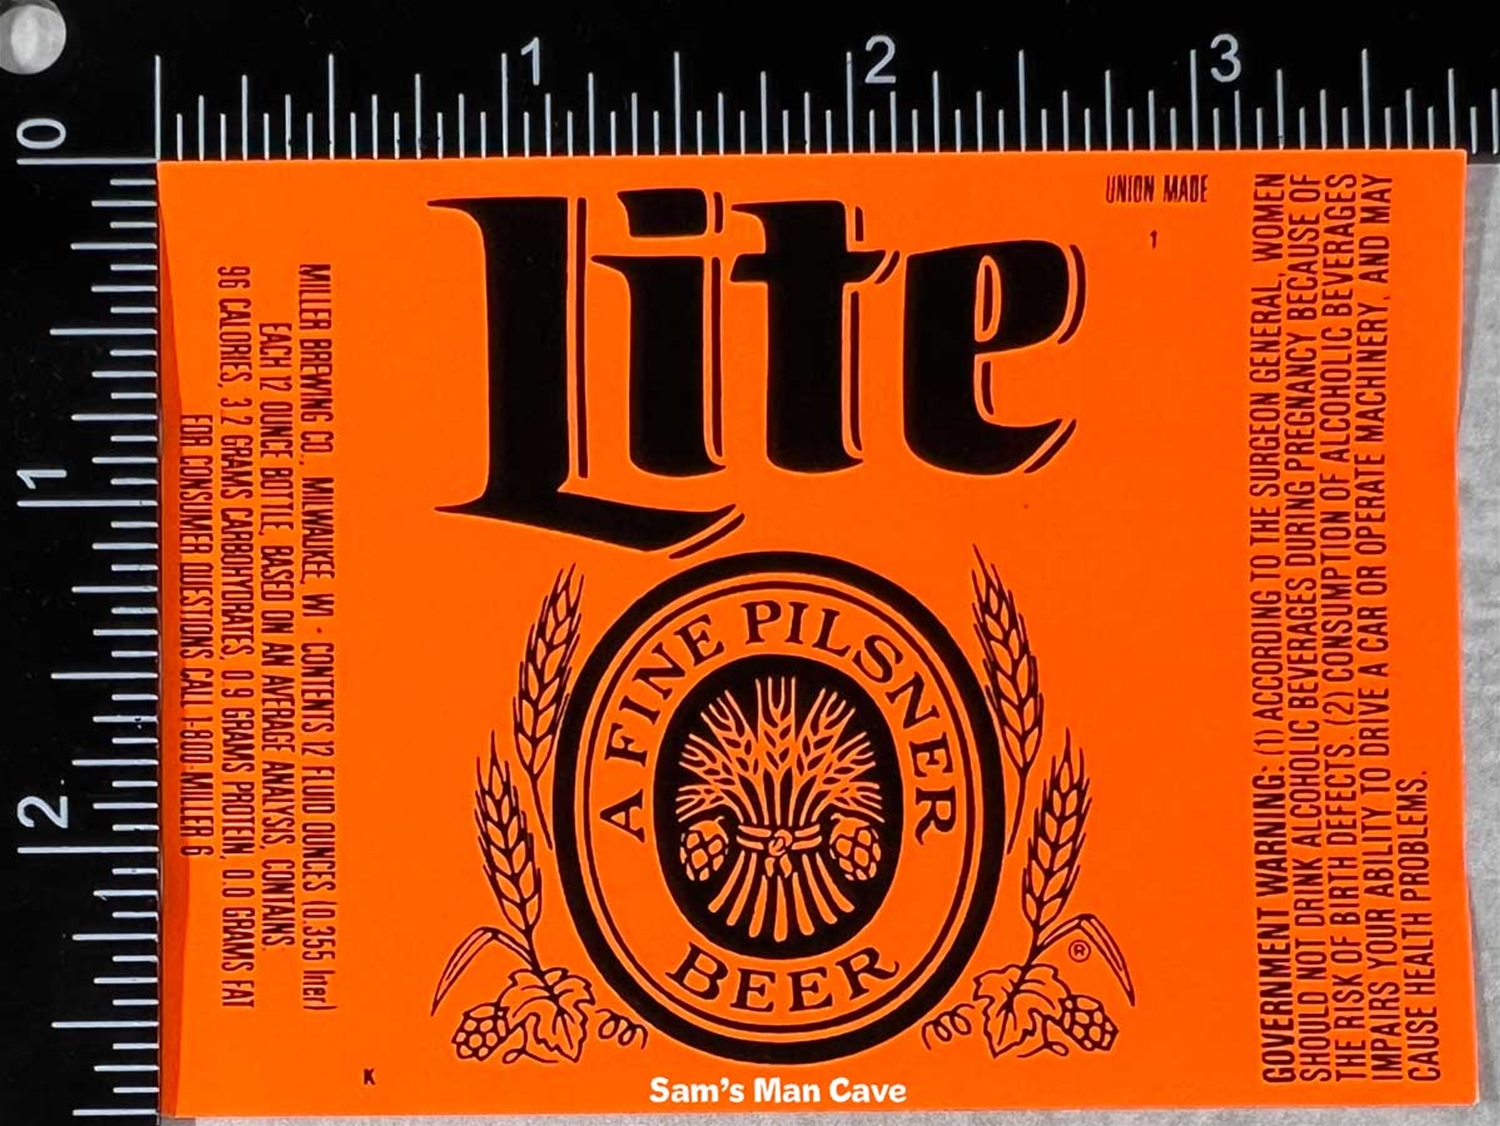 Lite Beer Label